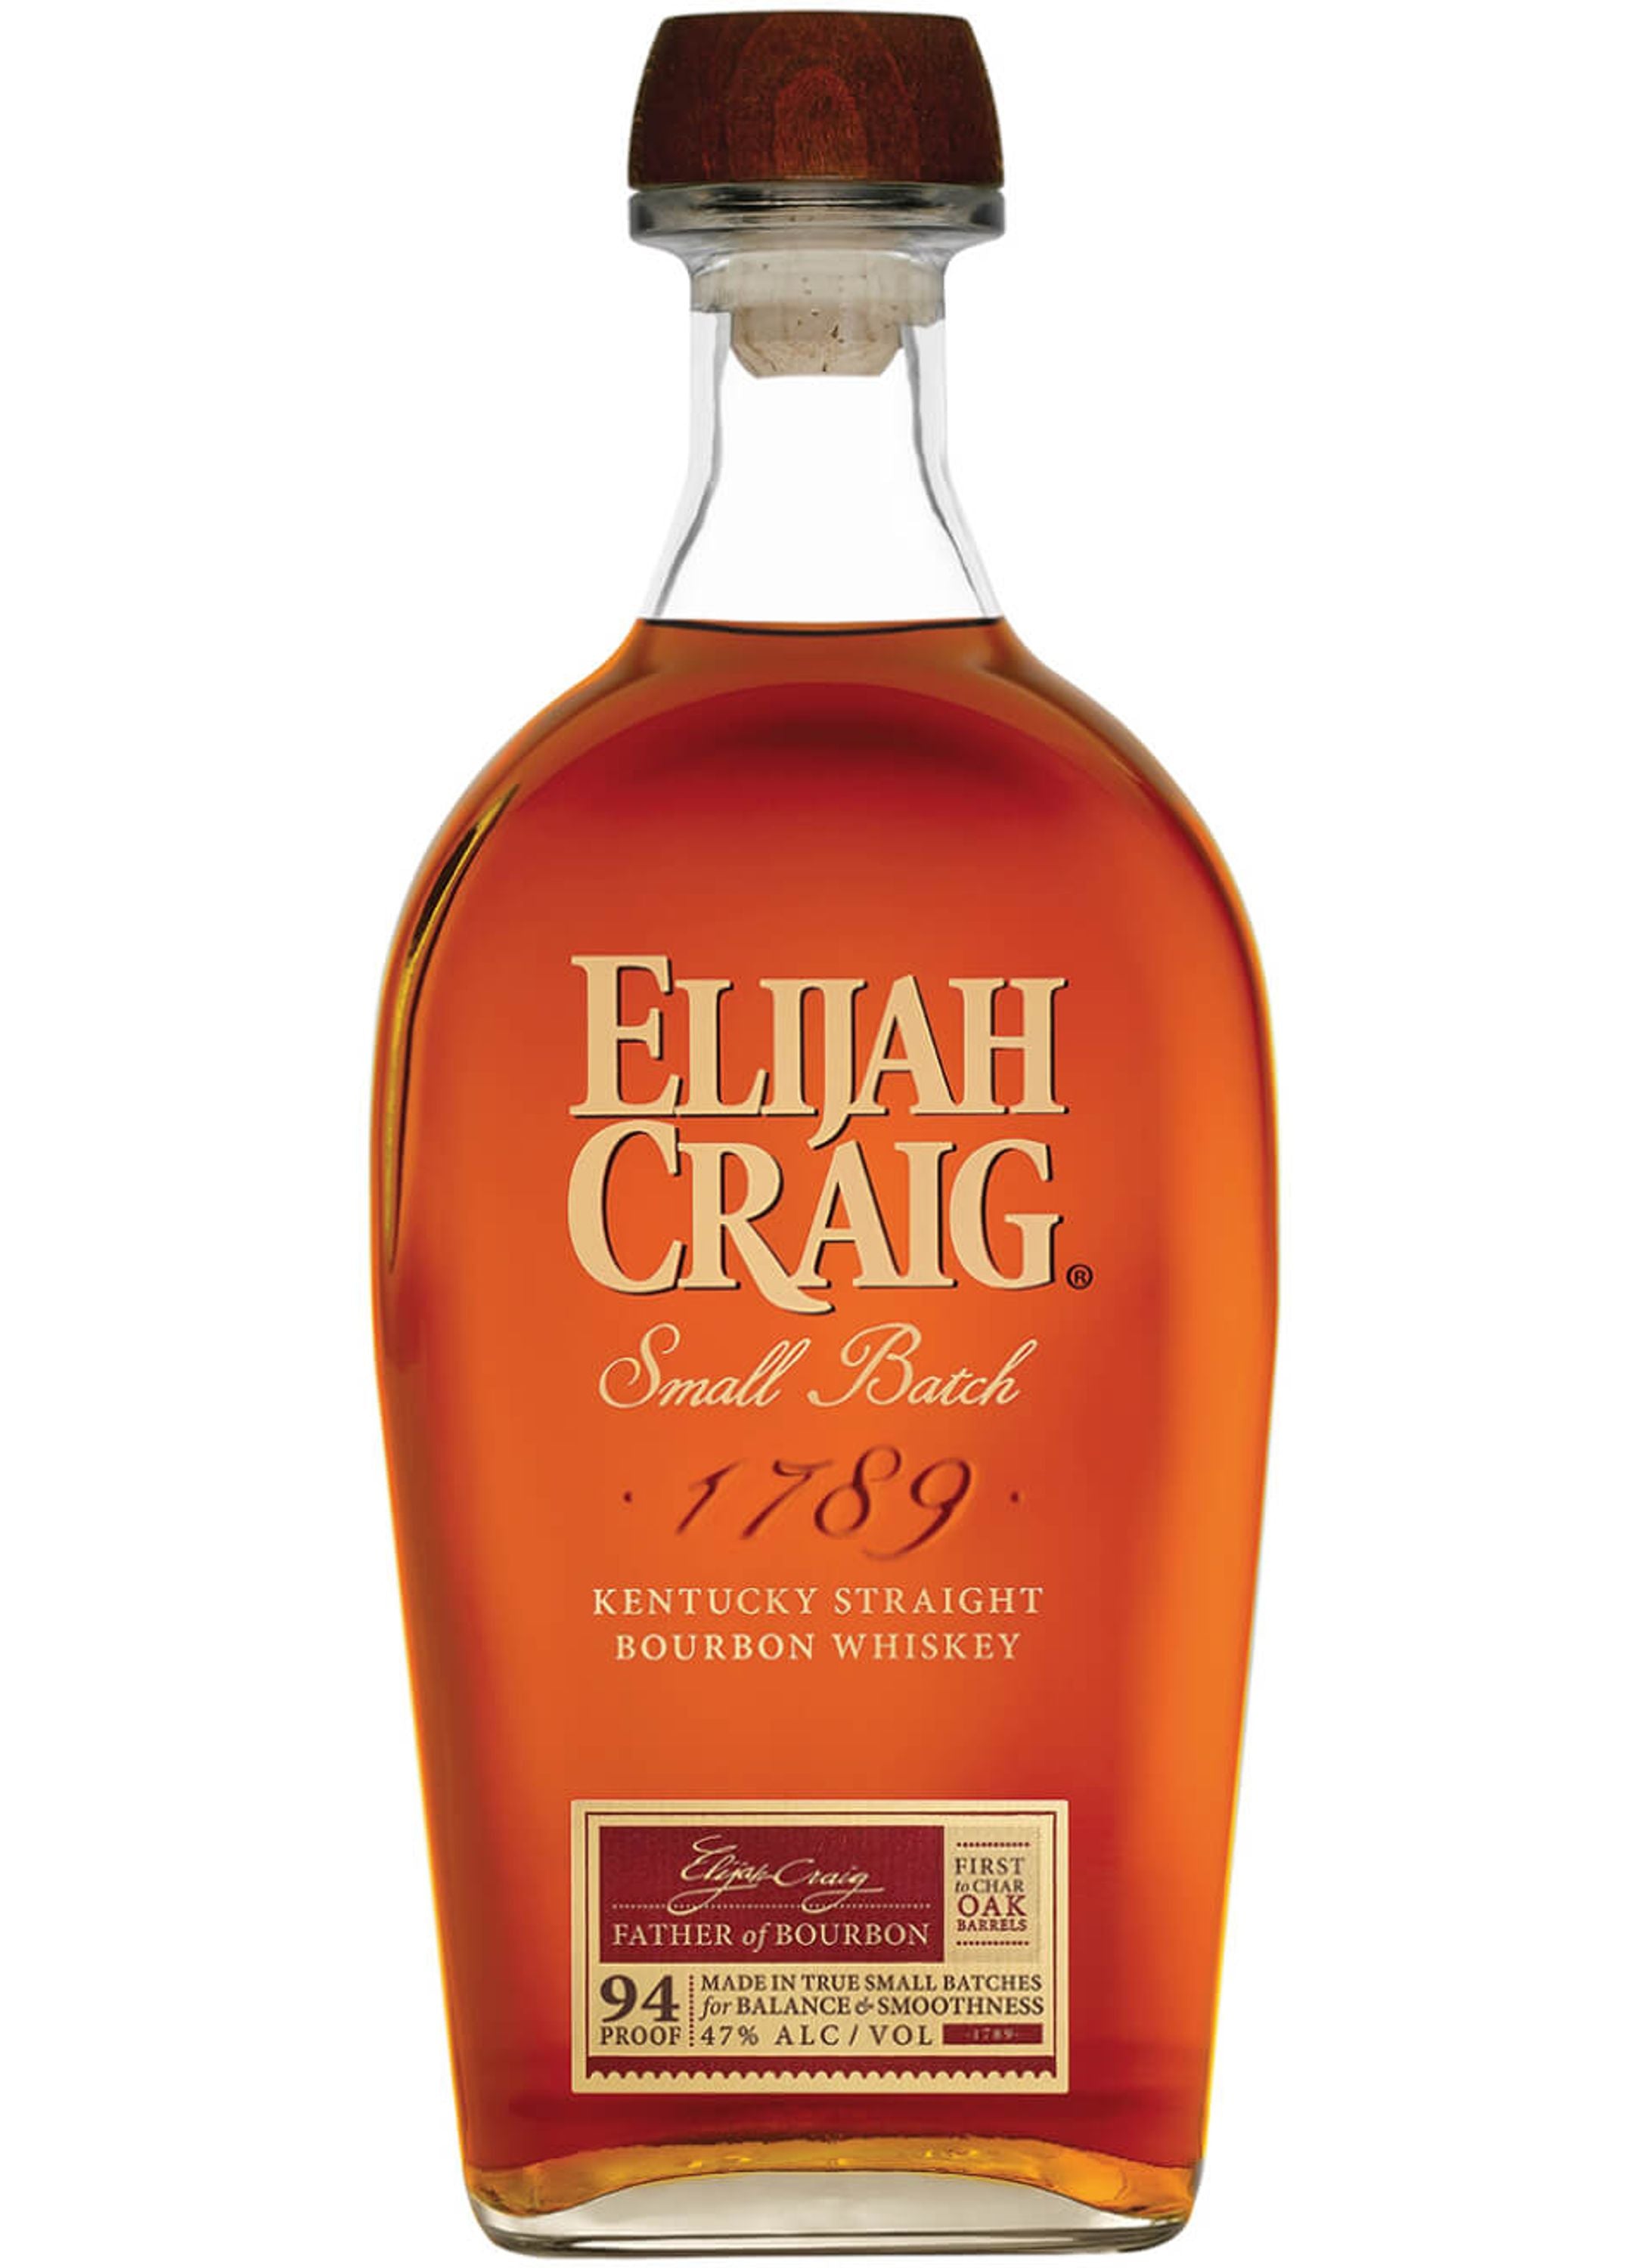 Elijah Craig Small Batch Kentucky Straight Bourbon Whiskey 0.7l, alc. 47% by volume 